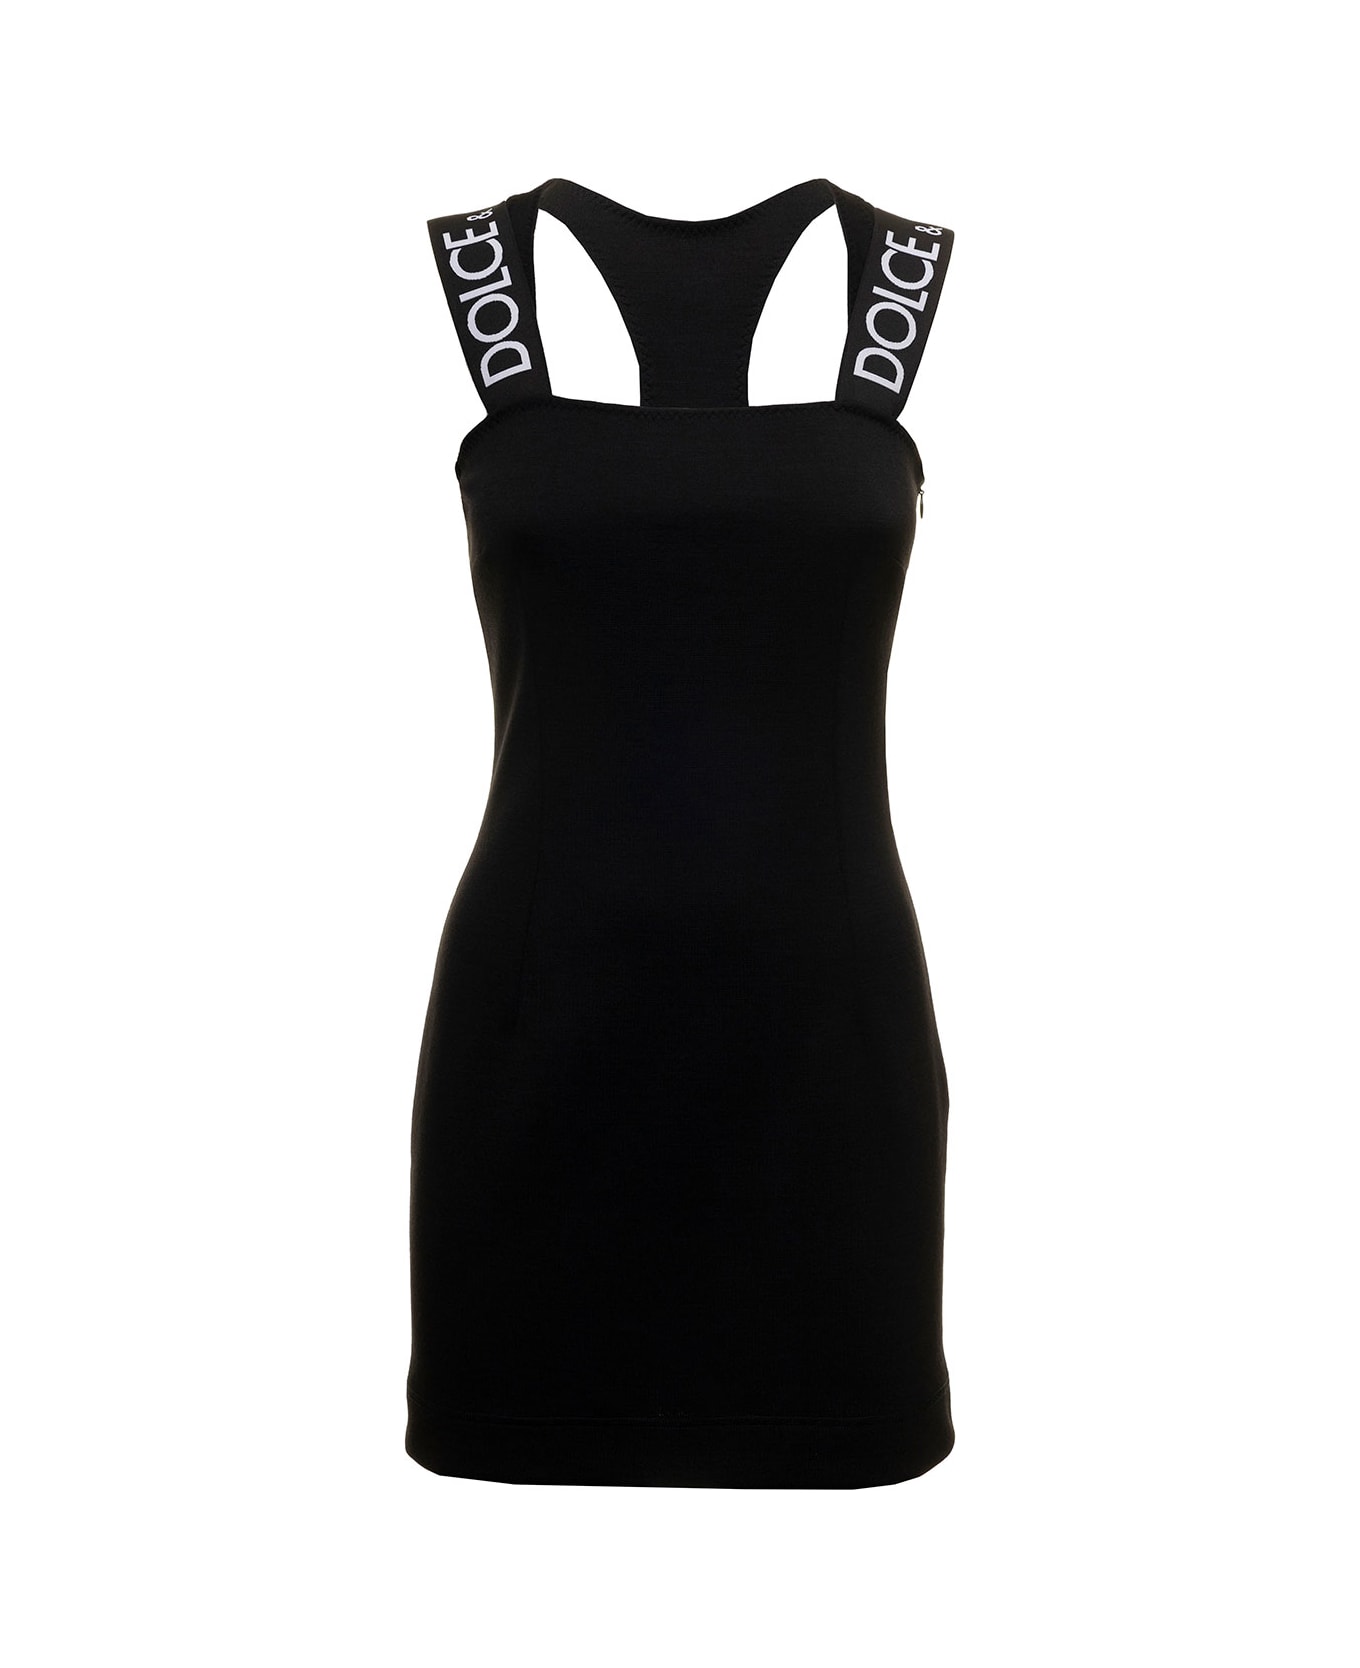 Dolce & Gabbana Black Sheath Dress In Stretch Fabric With Logoed Jacquard Shoulder Straps Dolce & Gabbana Woman - Black